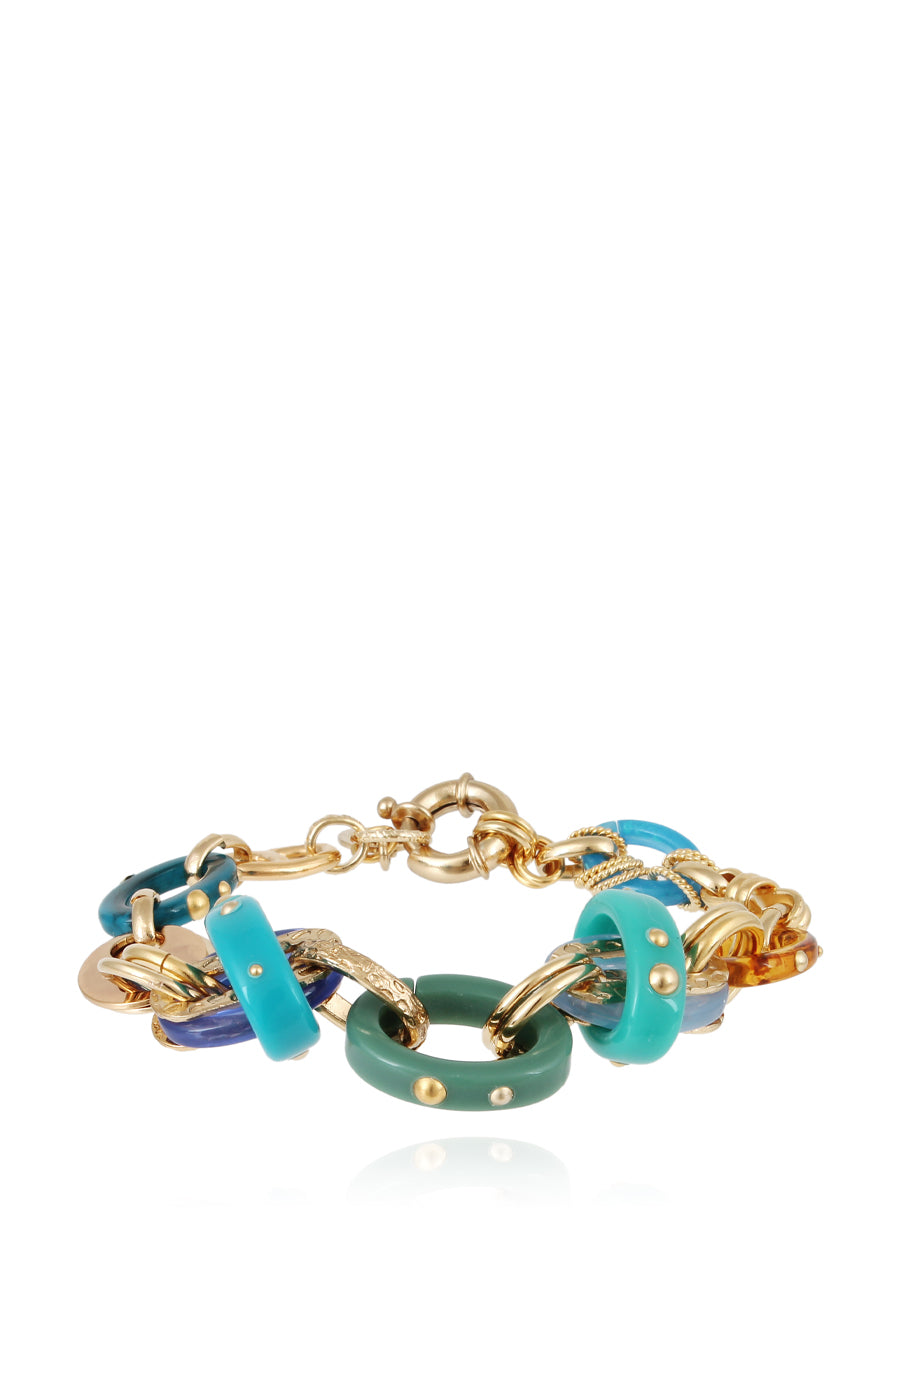 GAS BIJOUX Prato Bracelet - Turquoise